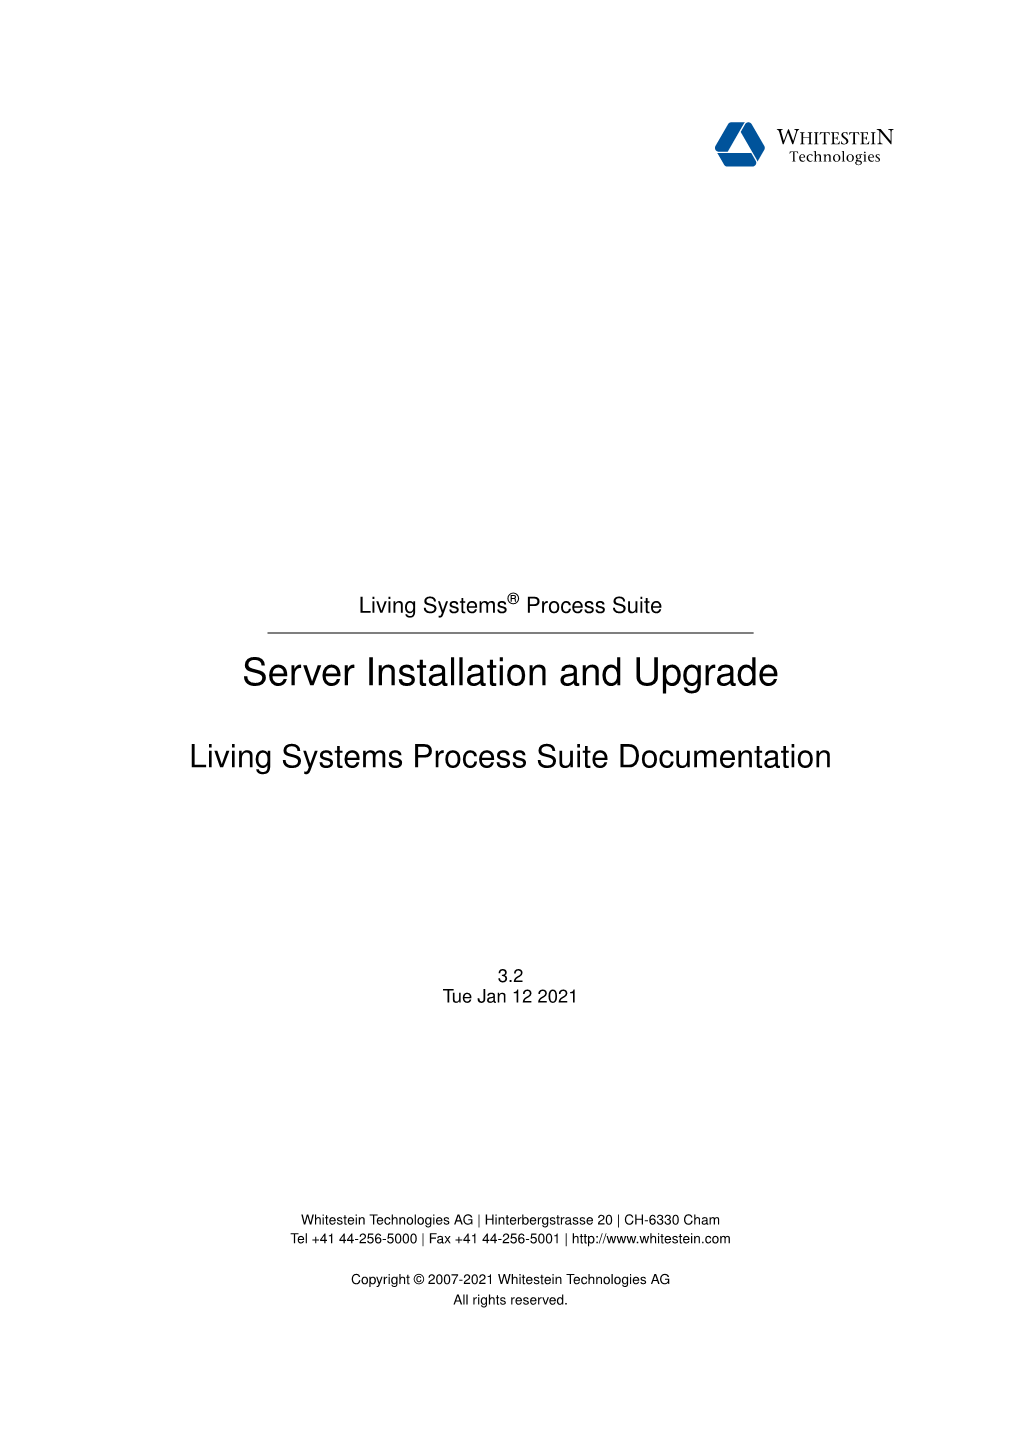 Server Installation and Upgrade